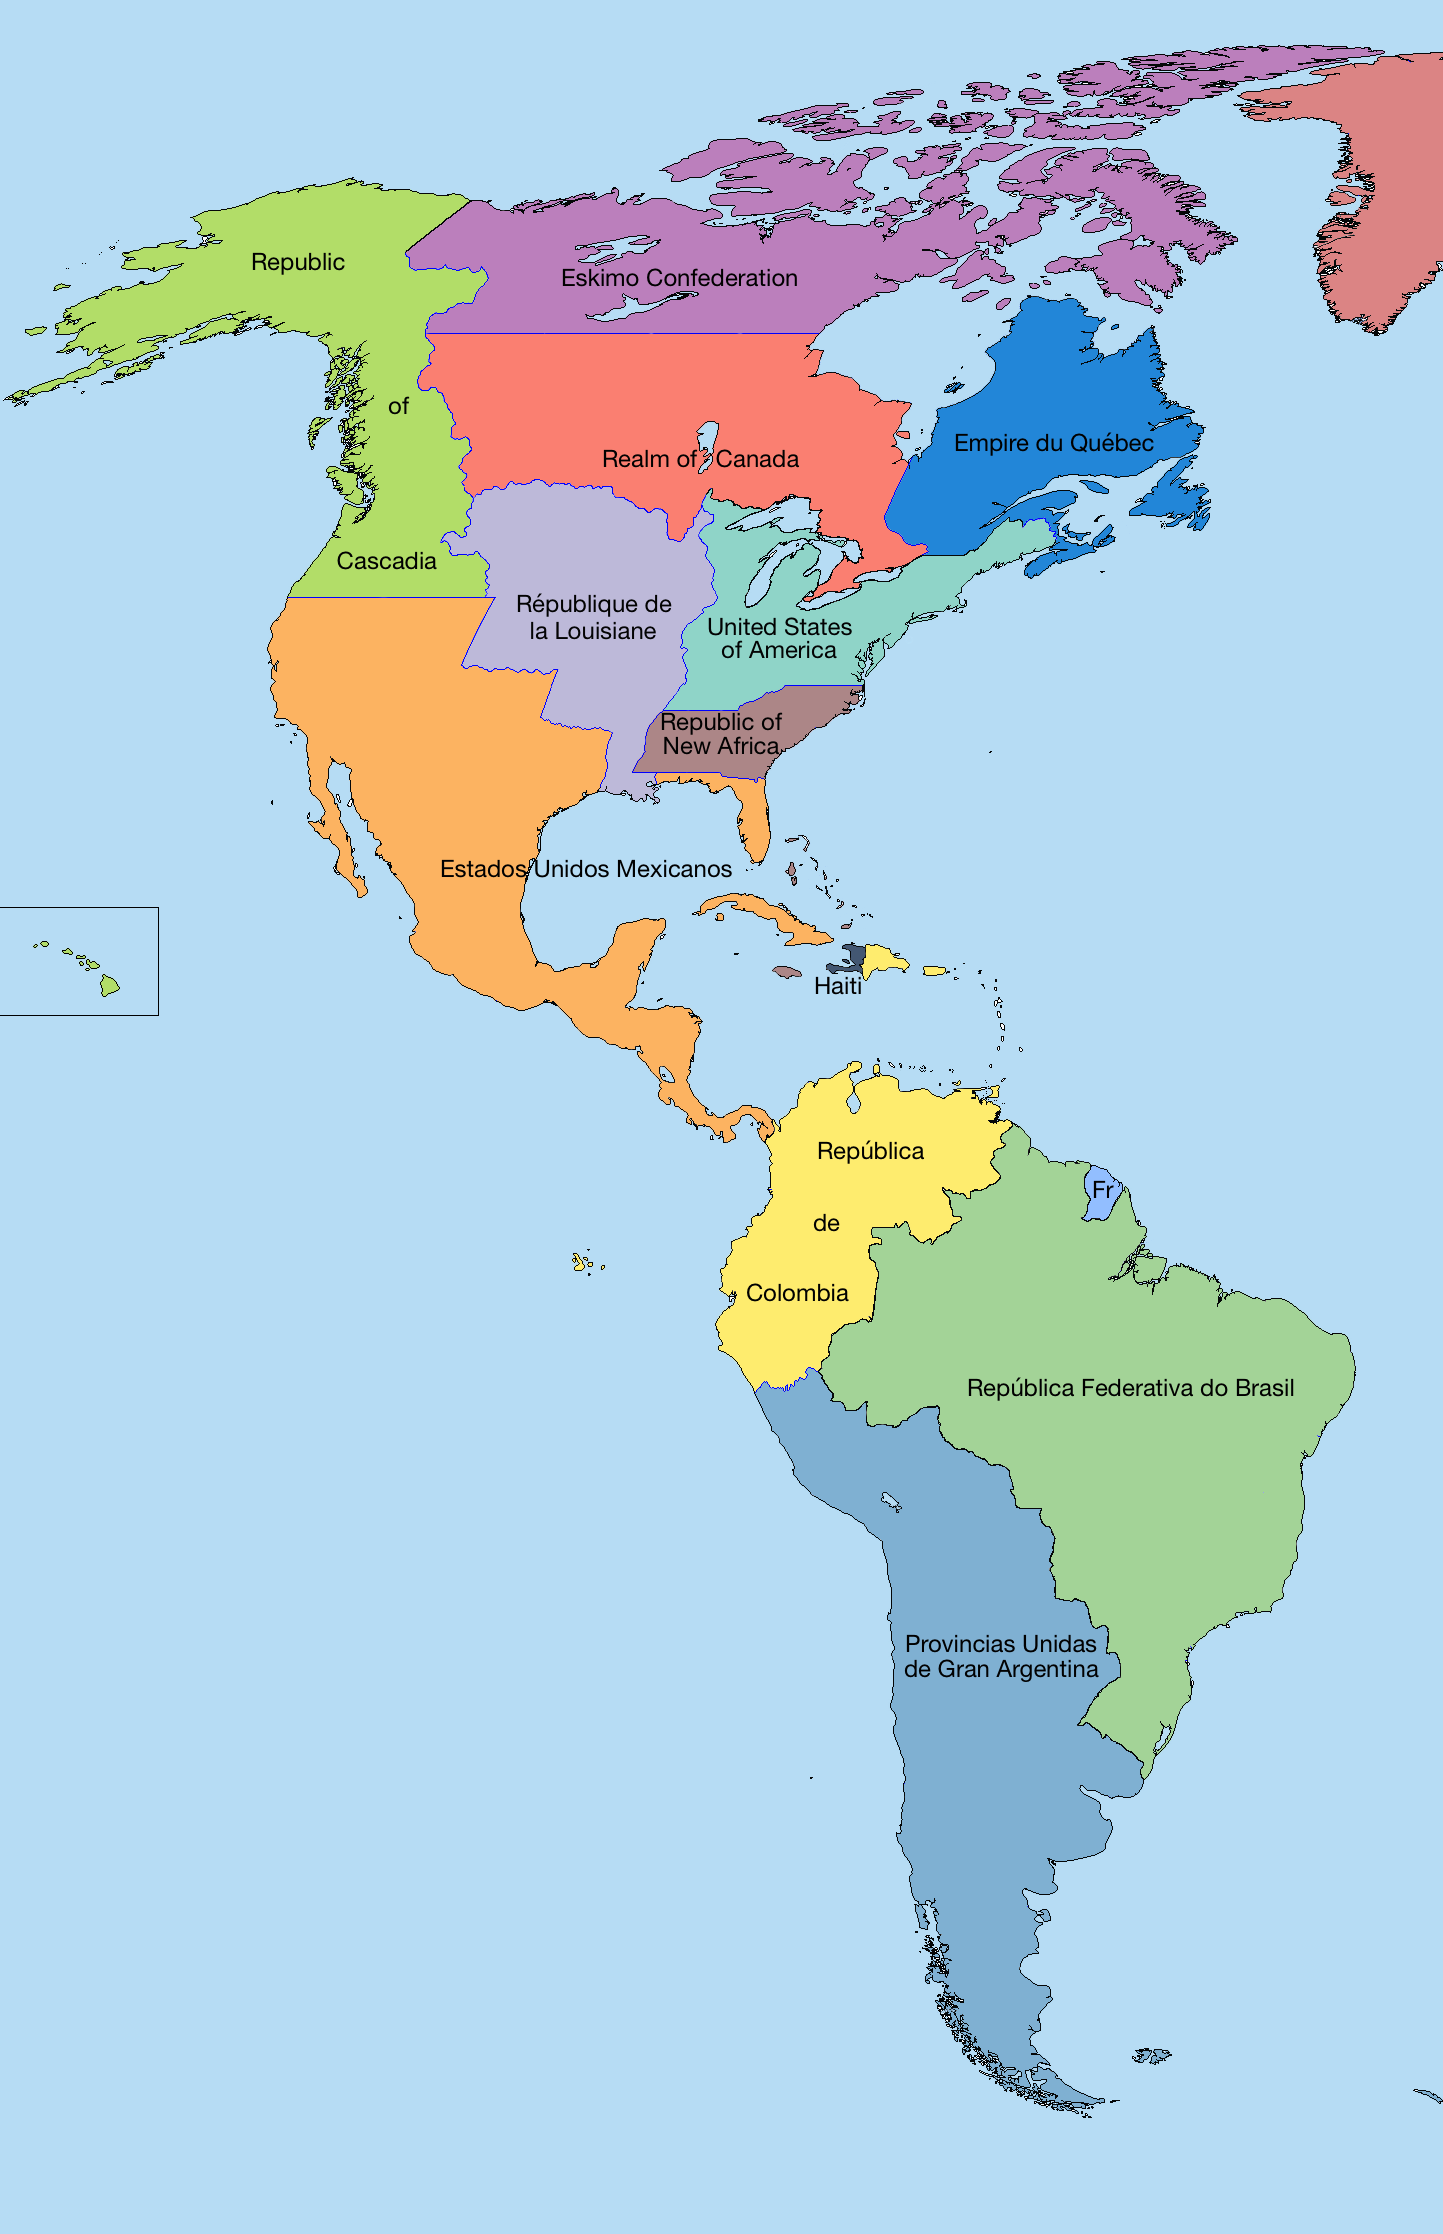 Un Continente Americano Equilibrato by LoreC10 on DeviantArt